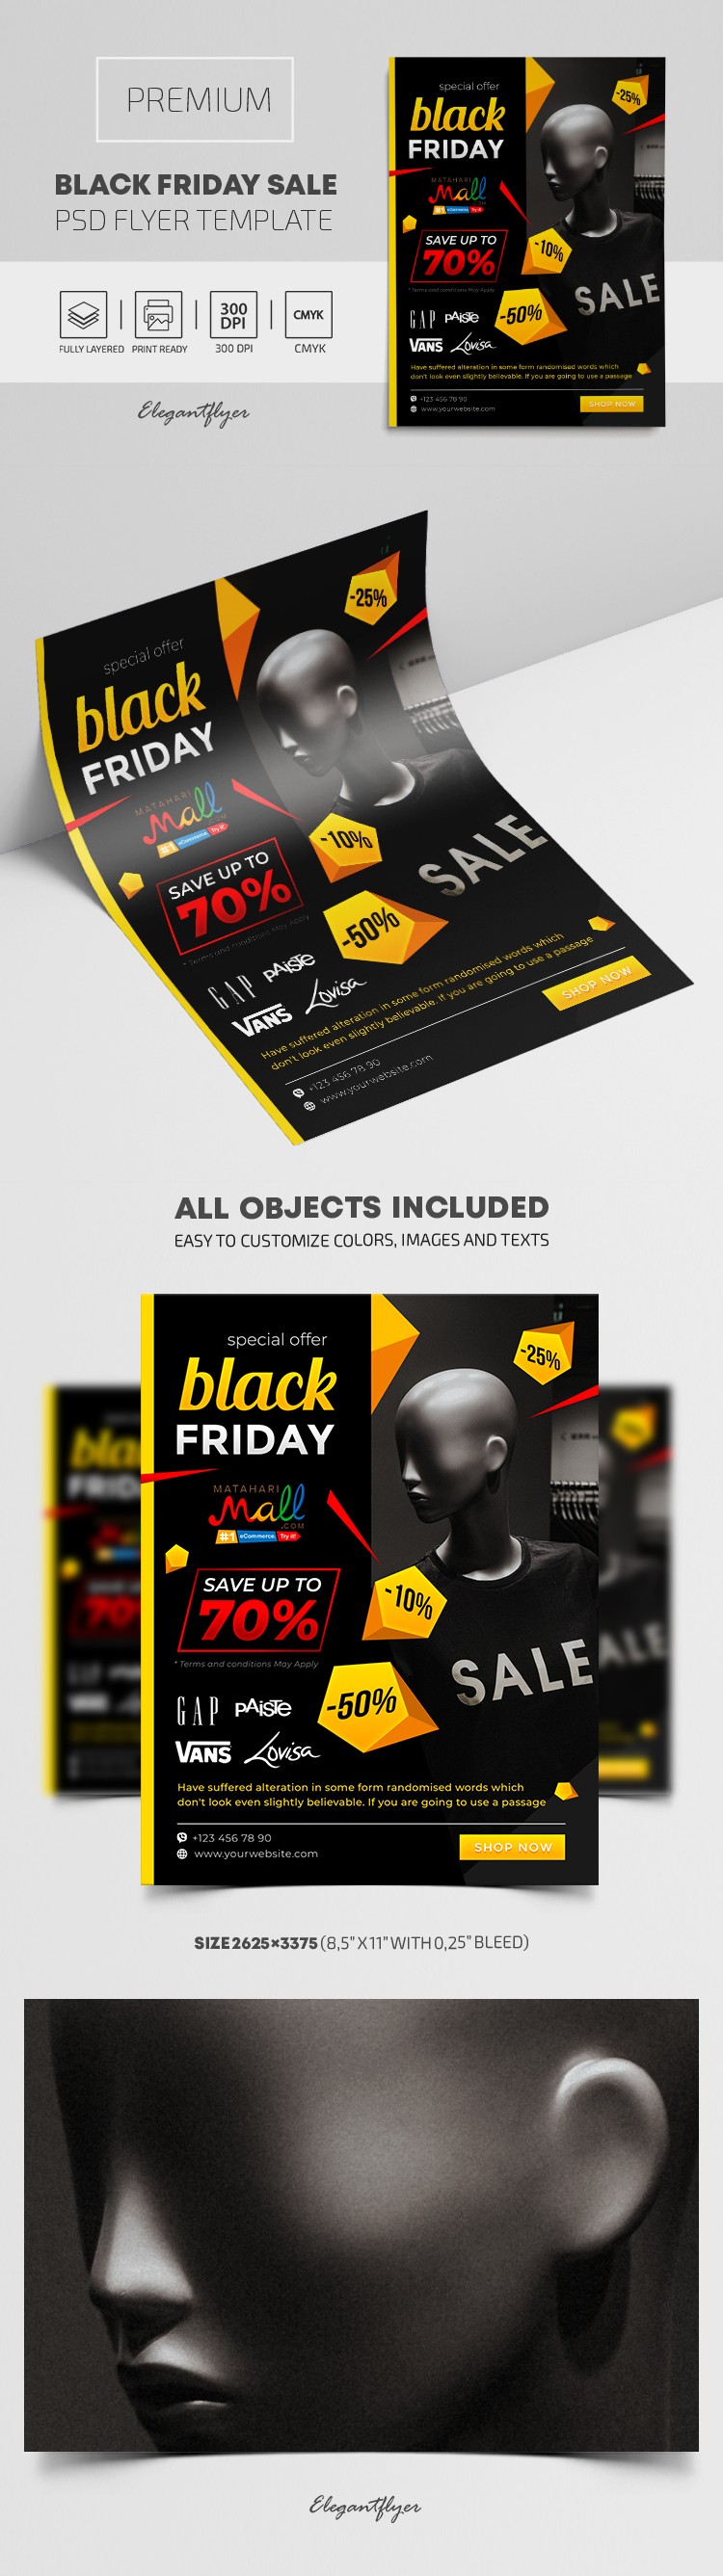 Black Friday Sales Flyer by ElegantFlyer